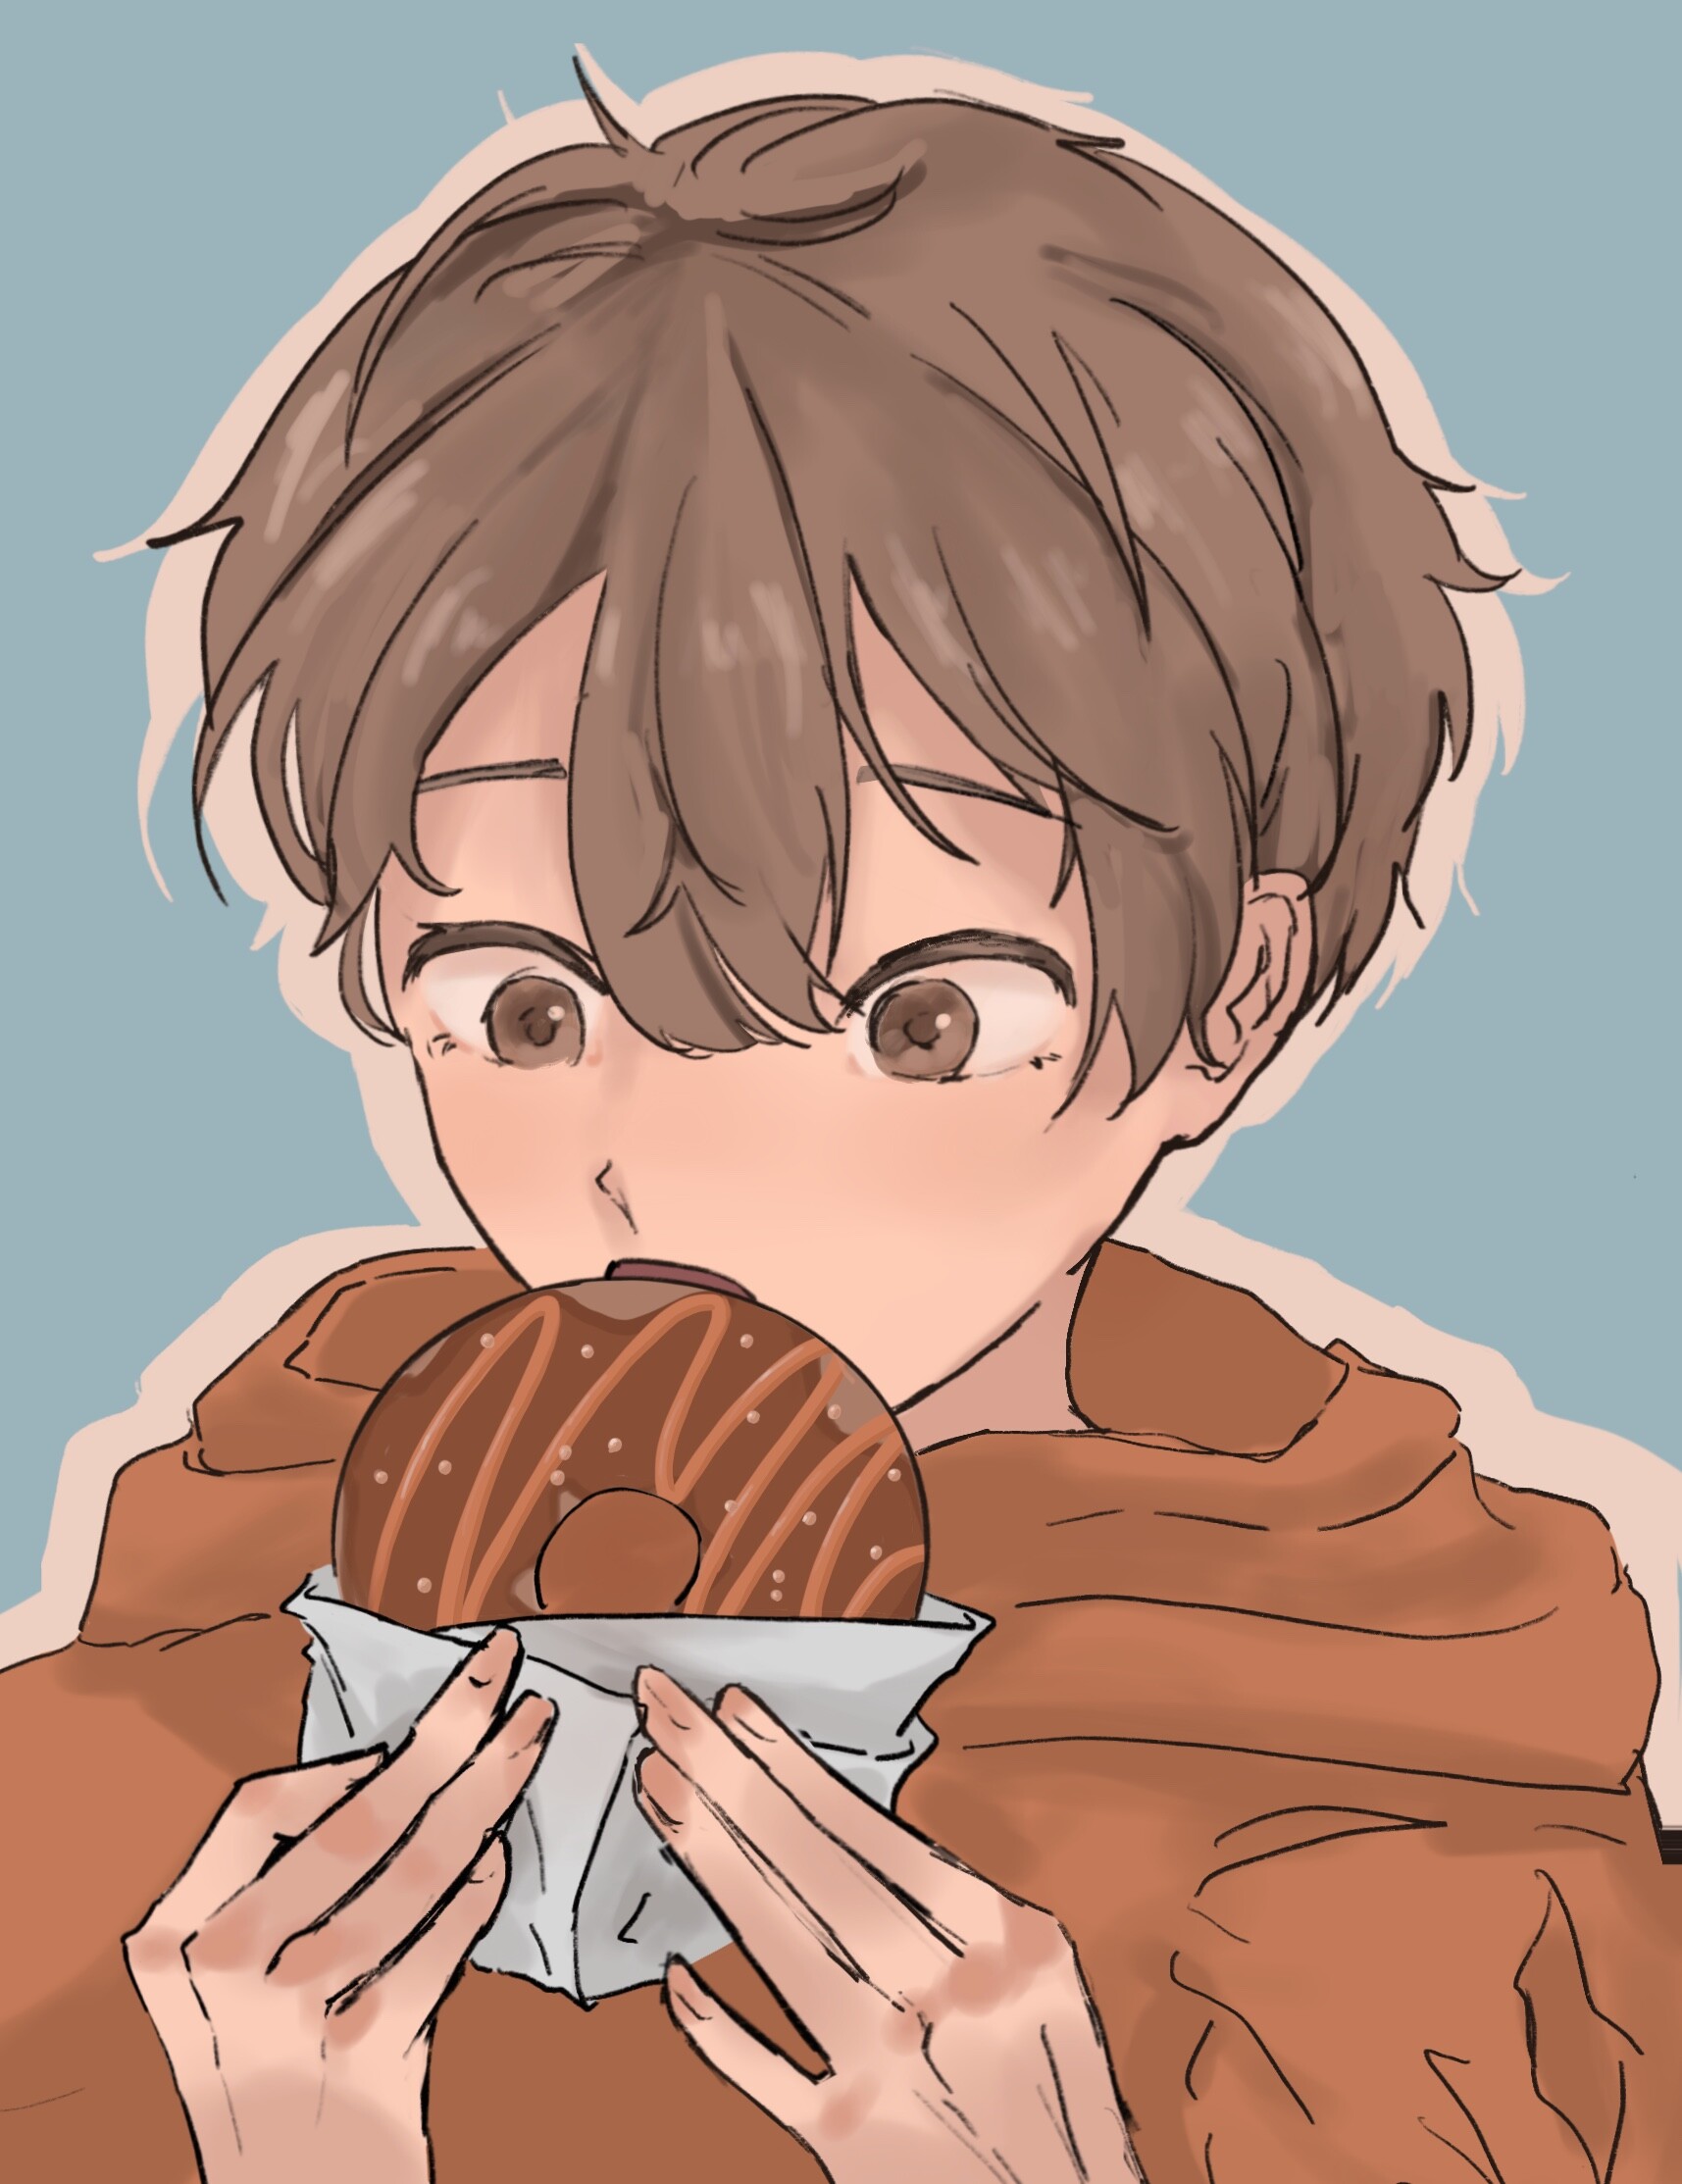 Anime Boy Eating a Cupcake by Asuna76 on DeviantArt